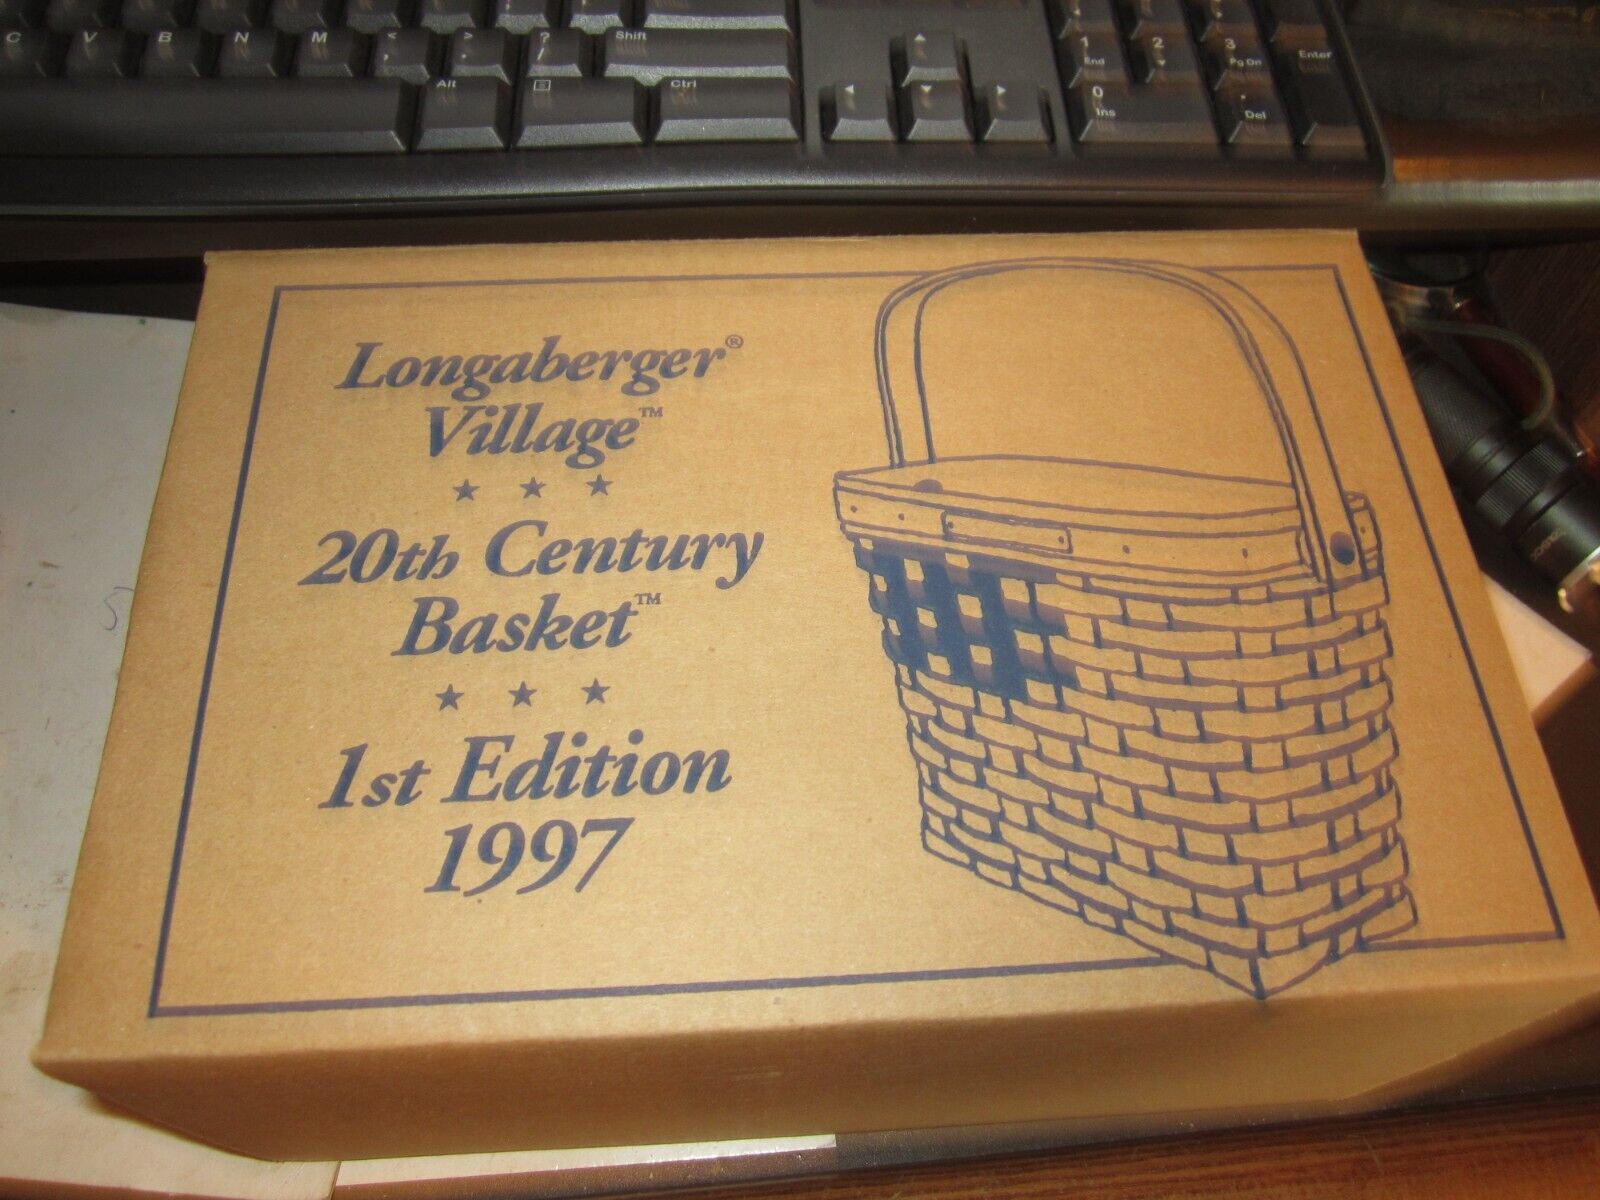 VTG Longaberger Village 20th Century Basket 1st Edition 1997 Box 2 SIGNATURES